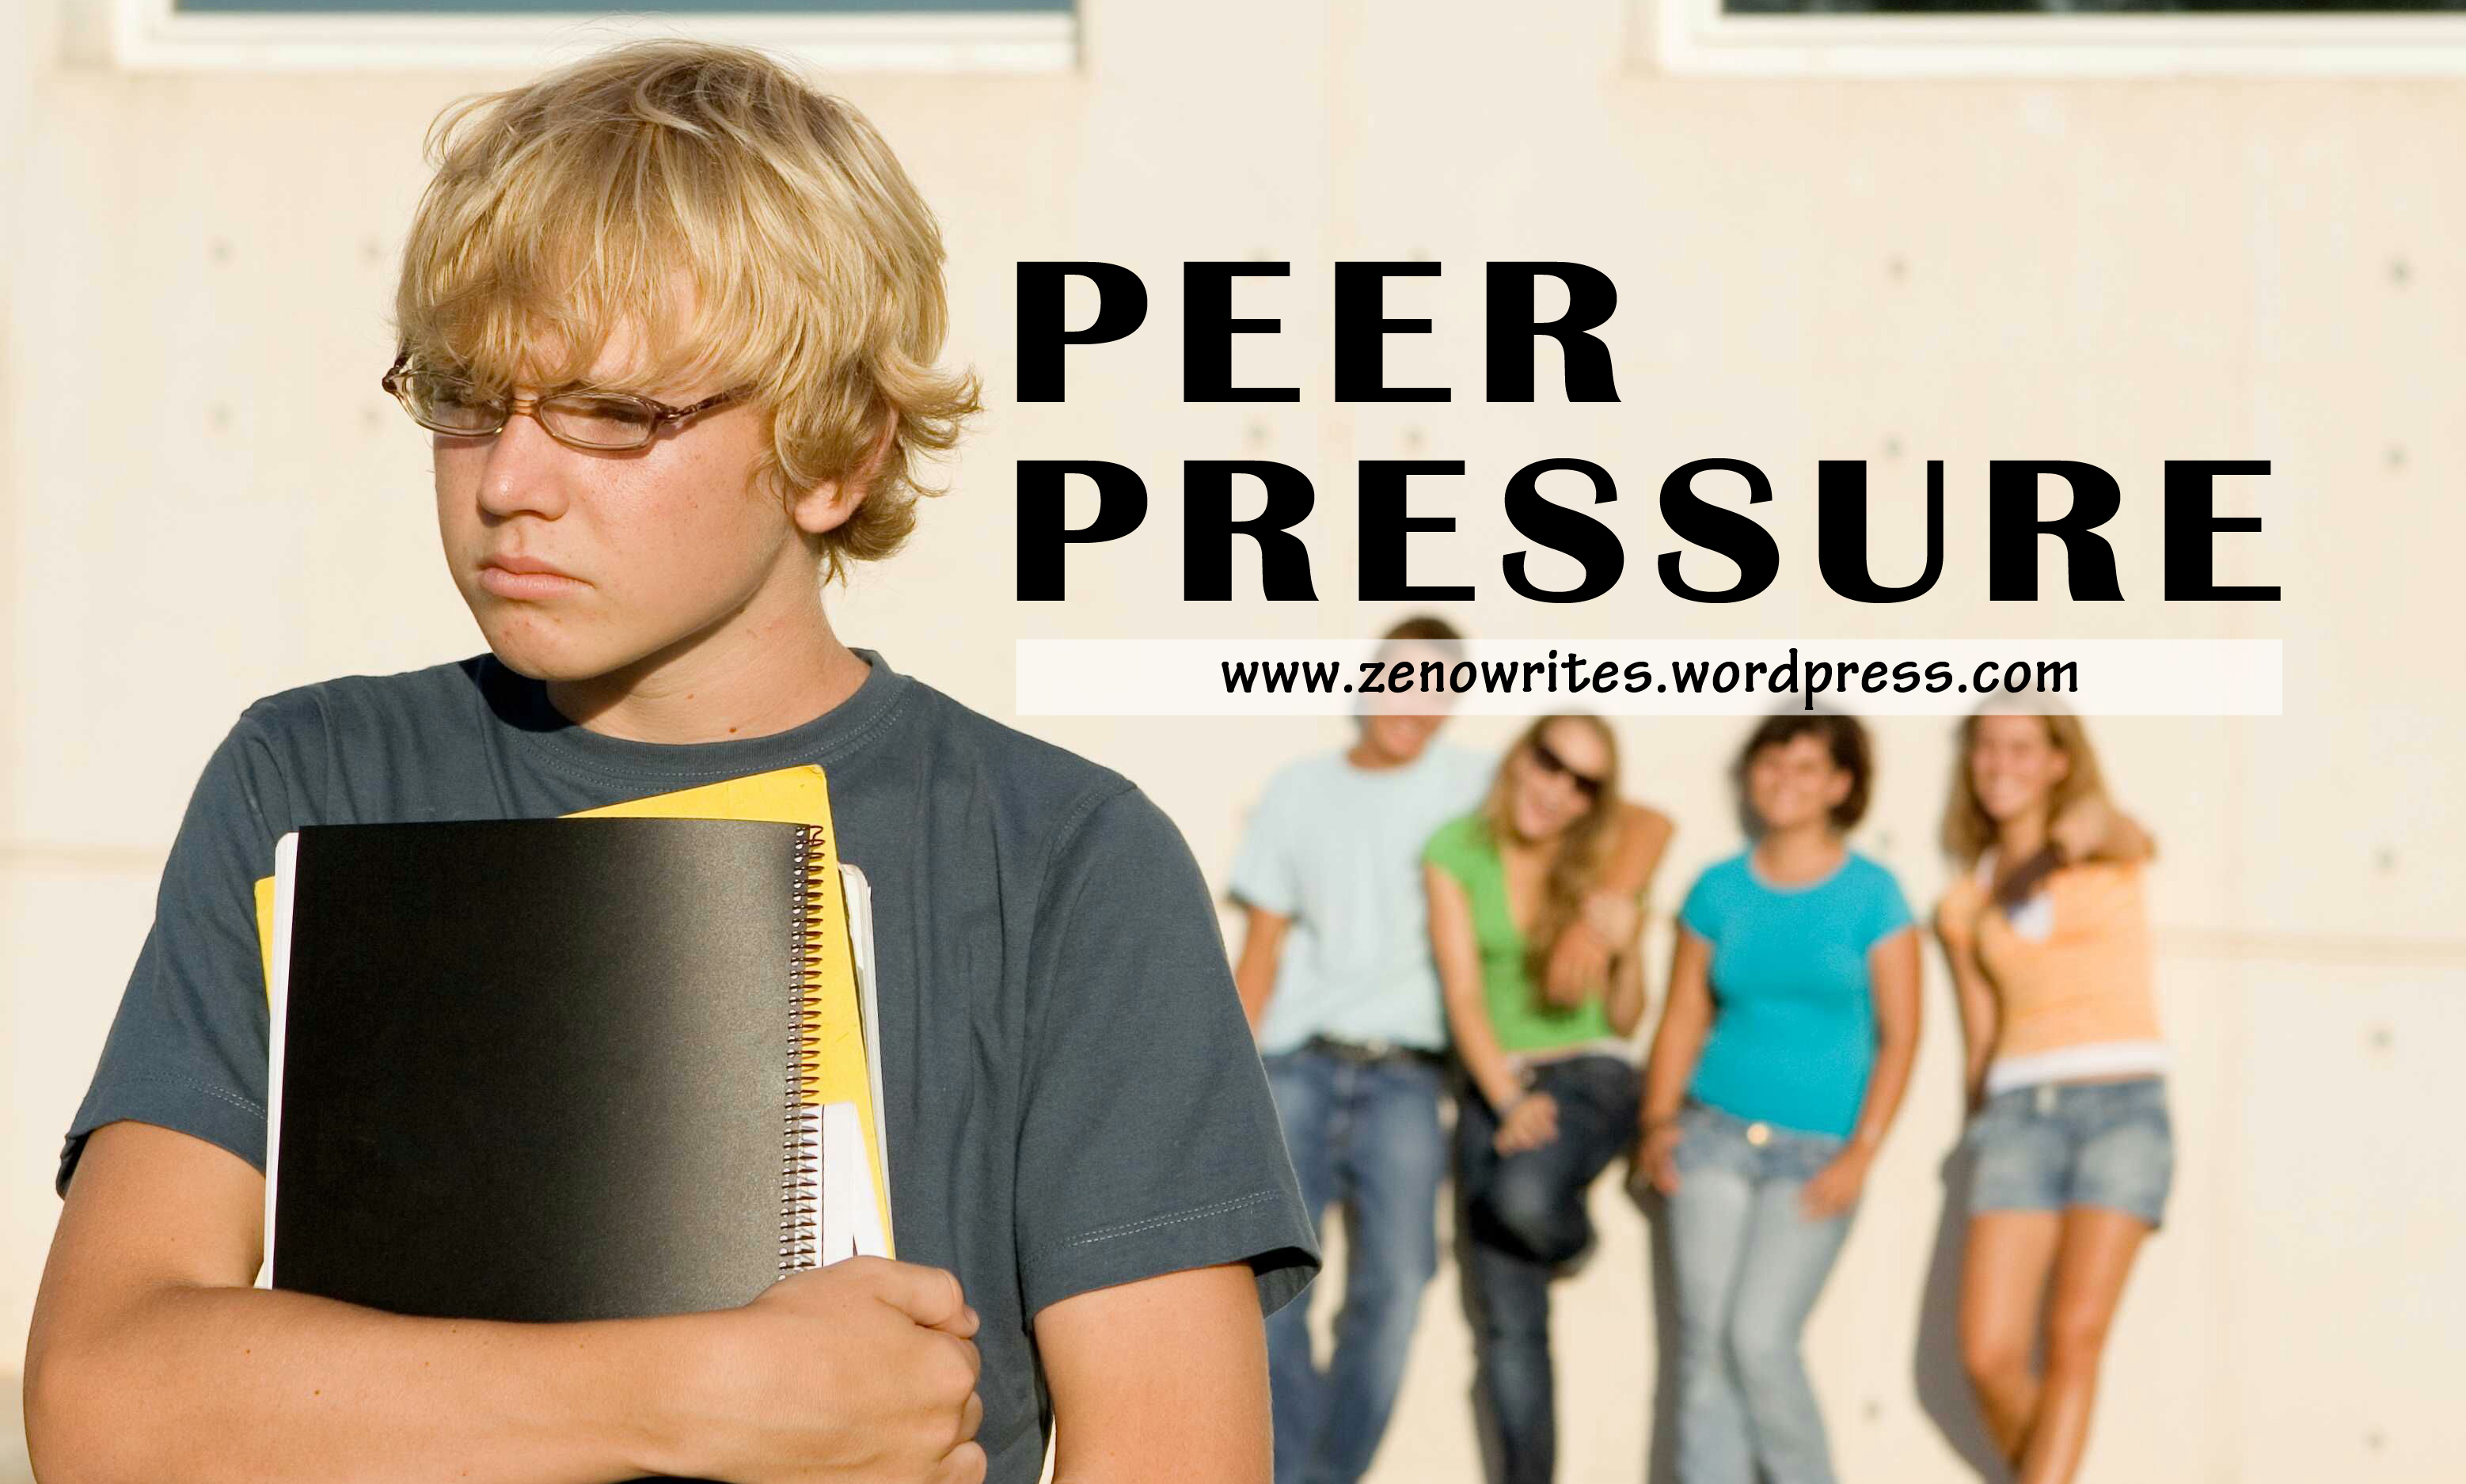 How Does Peer Pressure Impact Bullying Behavior?